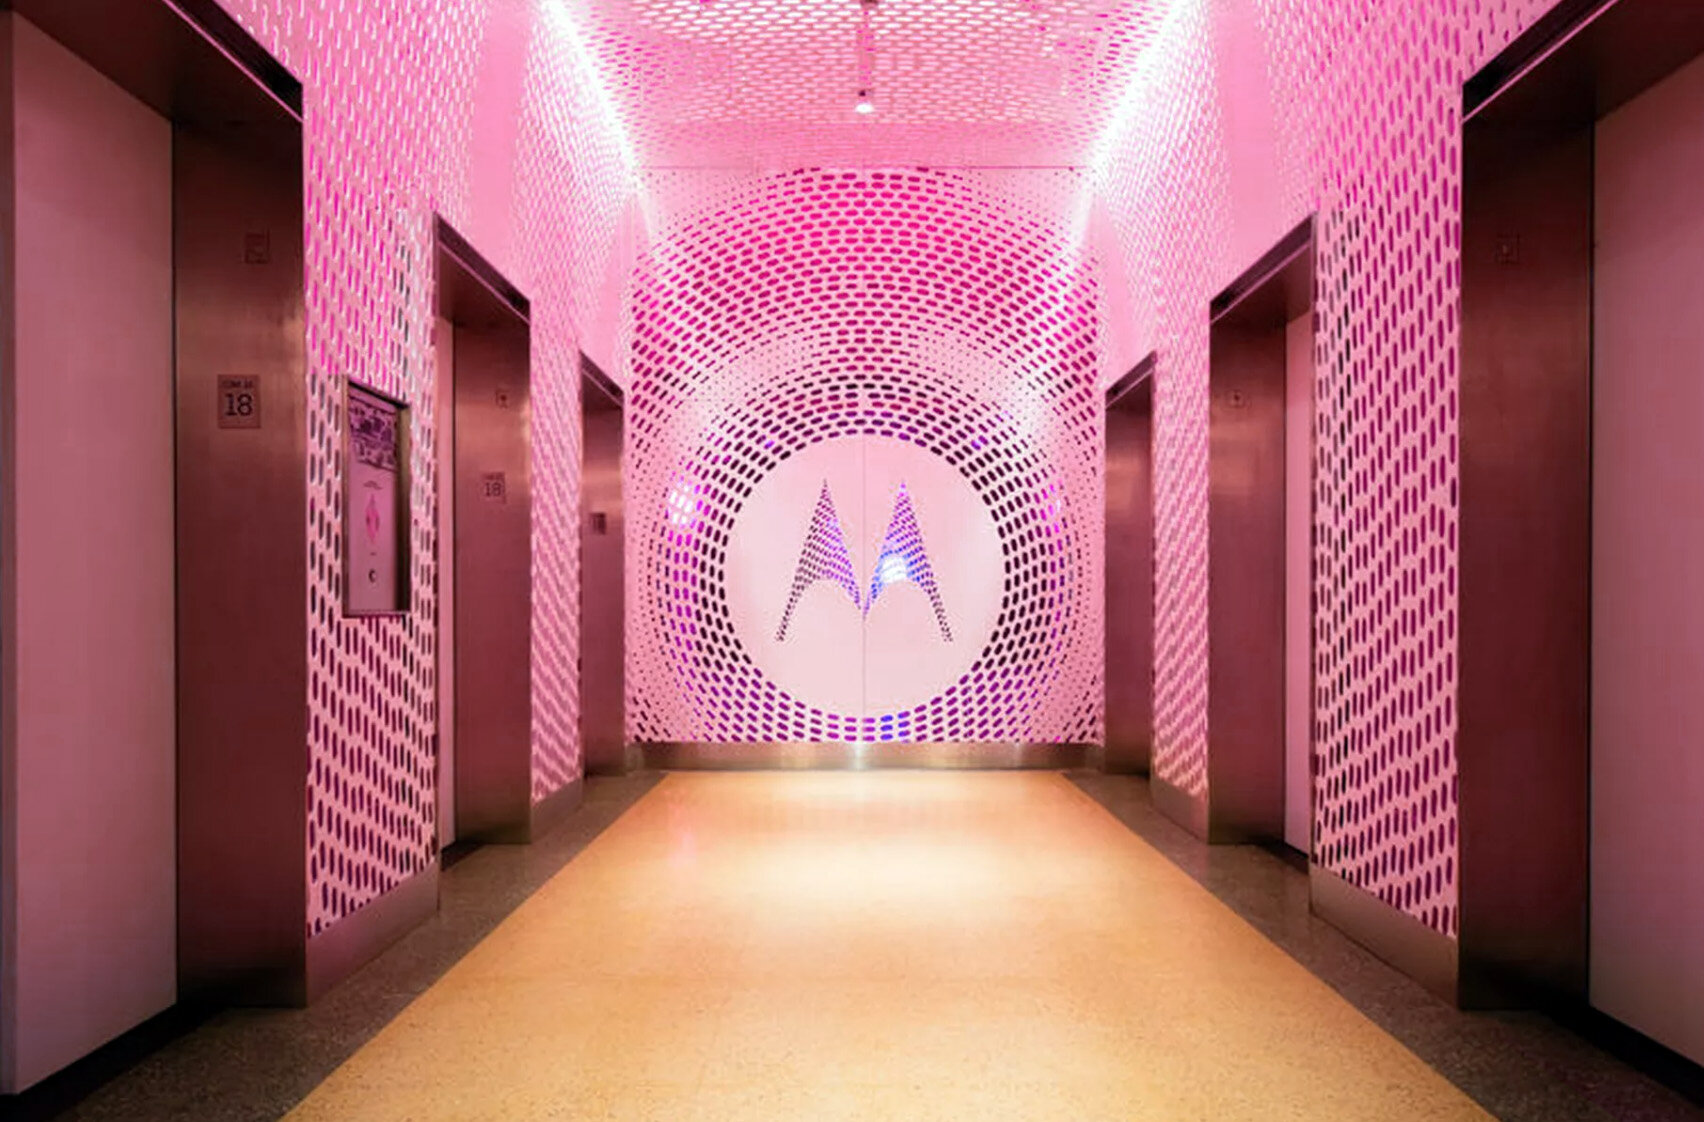 Motorola Mobility Headquarters in Chicago